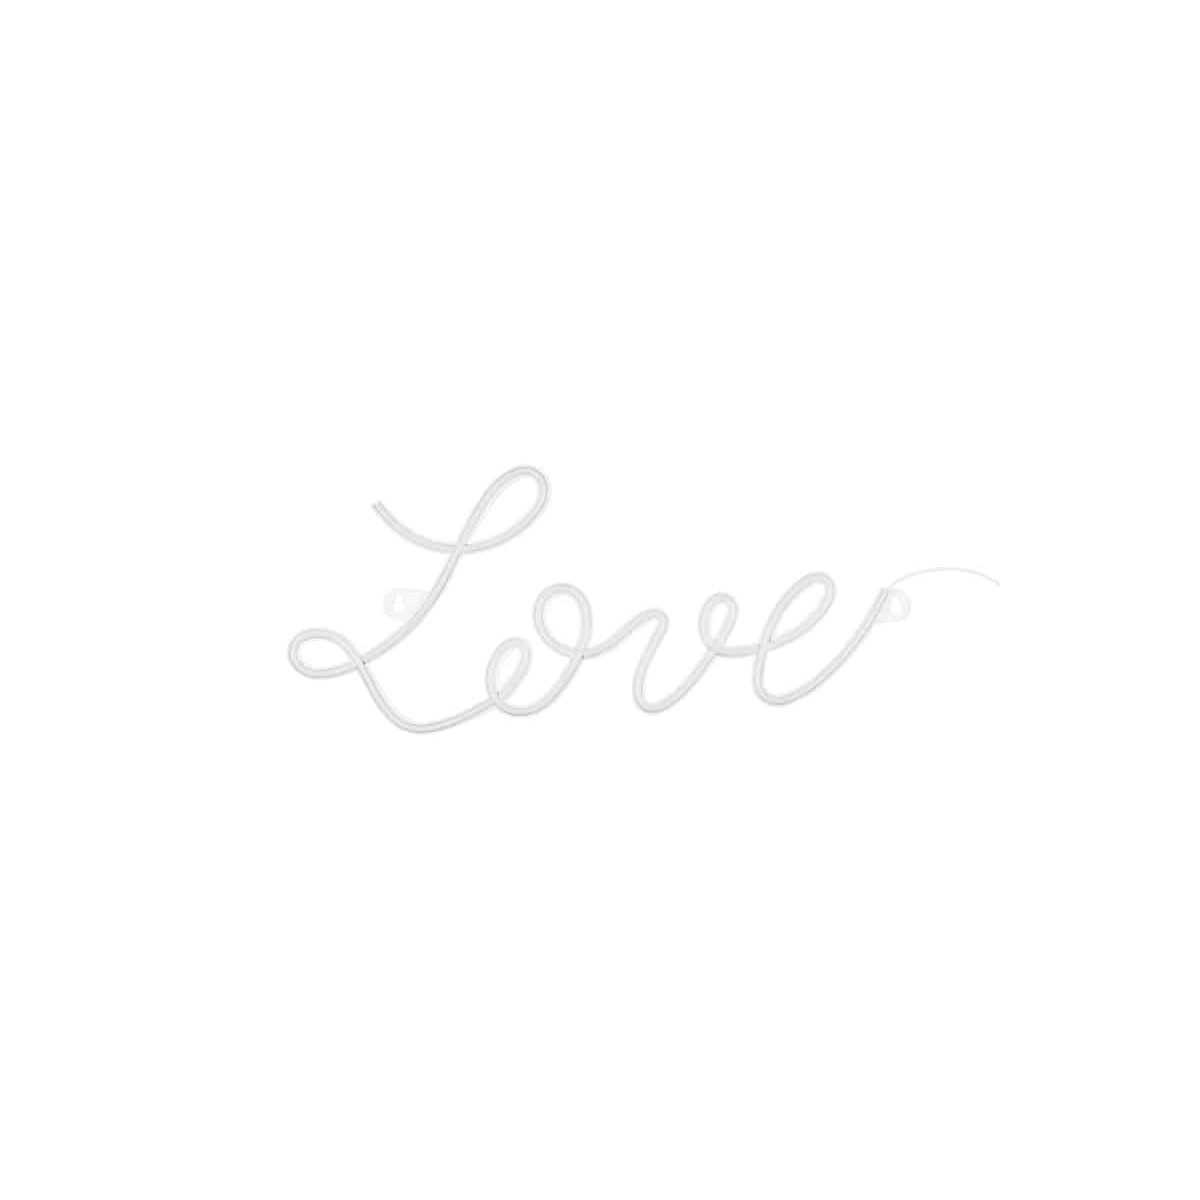 Scritta Led luminosa Love 61 x 29,7cm